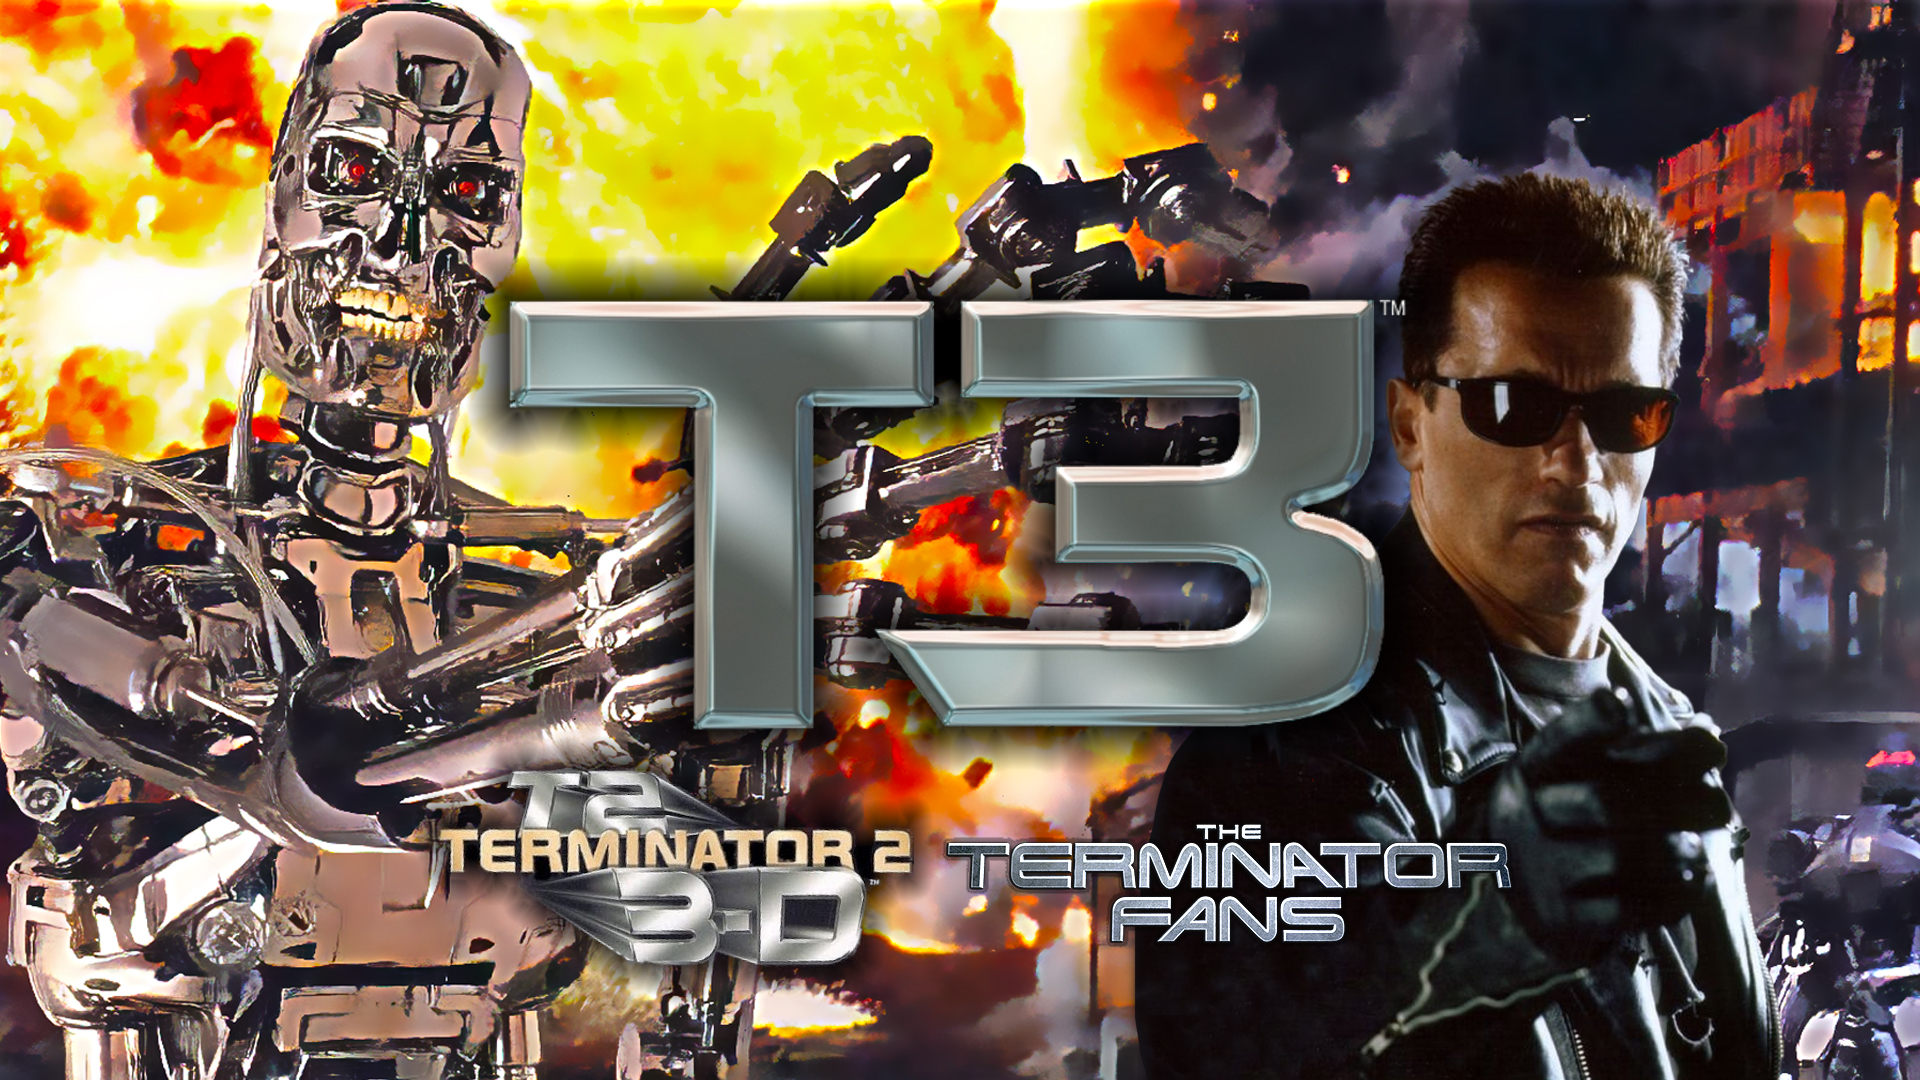 Is T2 3-D: Battle Across The Real Terminator TheTerminatorFans.com